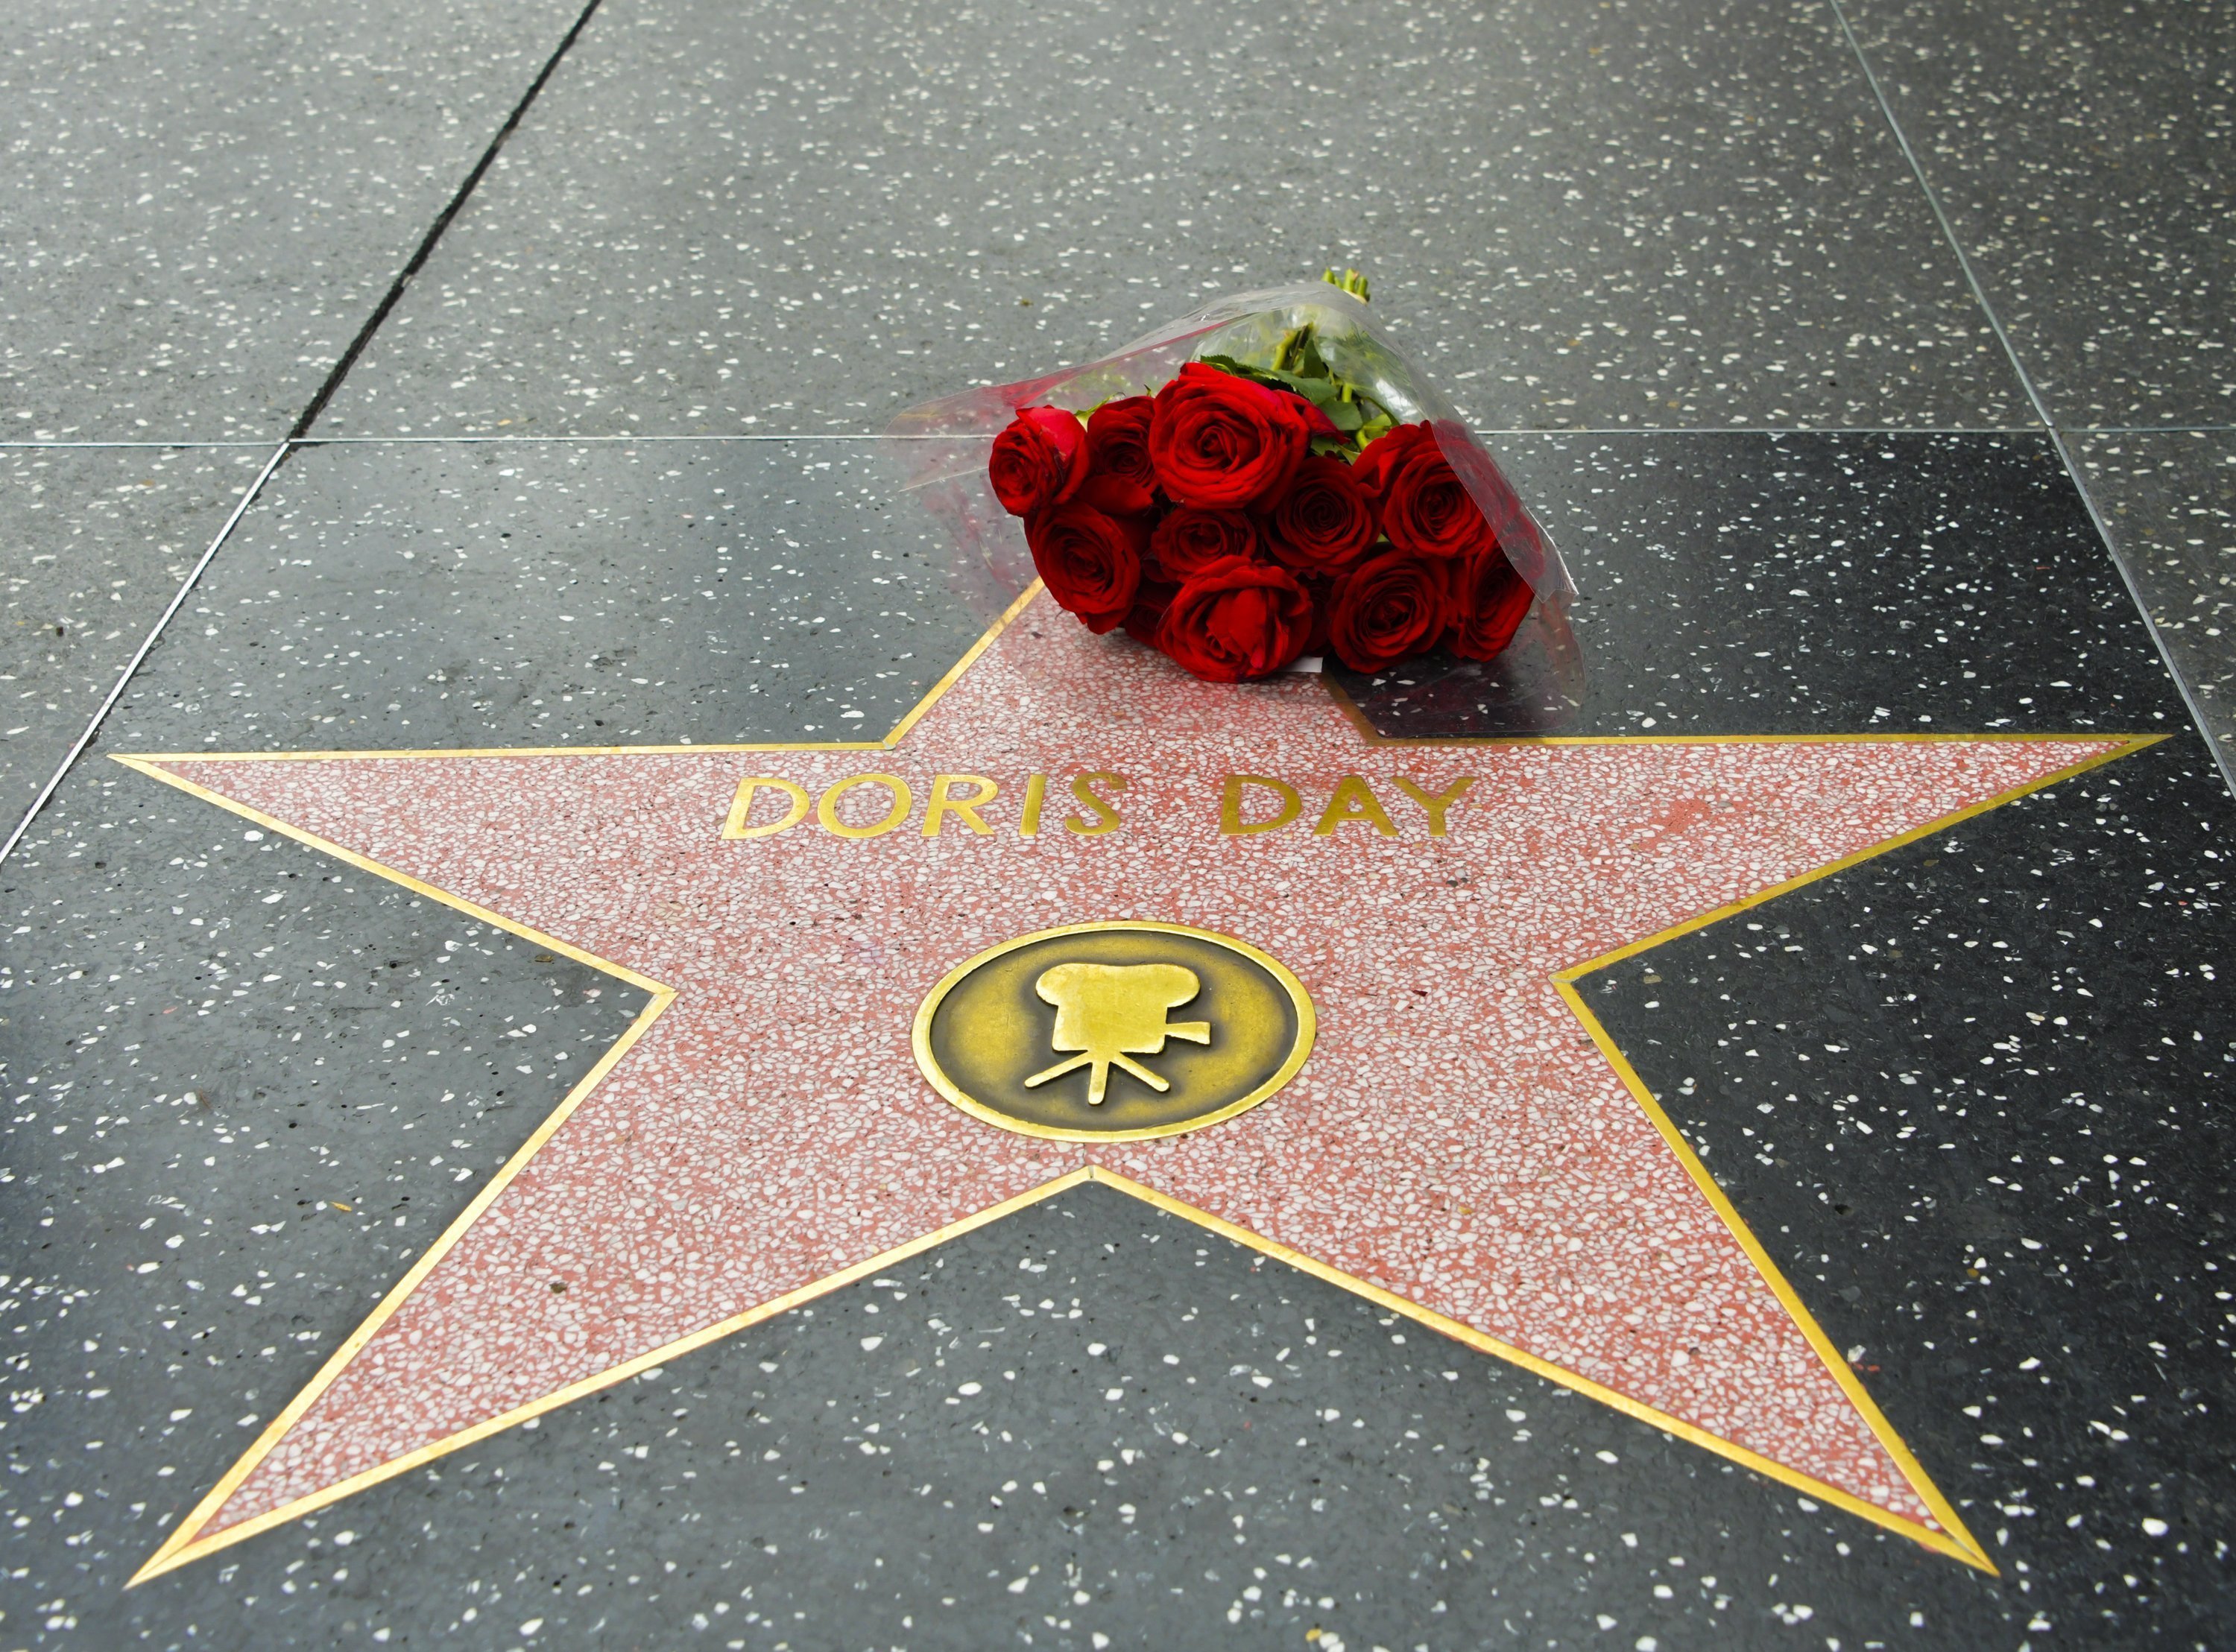 Estrella de Doris Day | Imagen tomada de: Getty Images